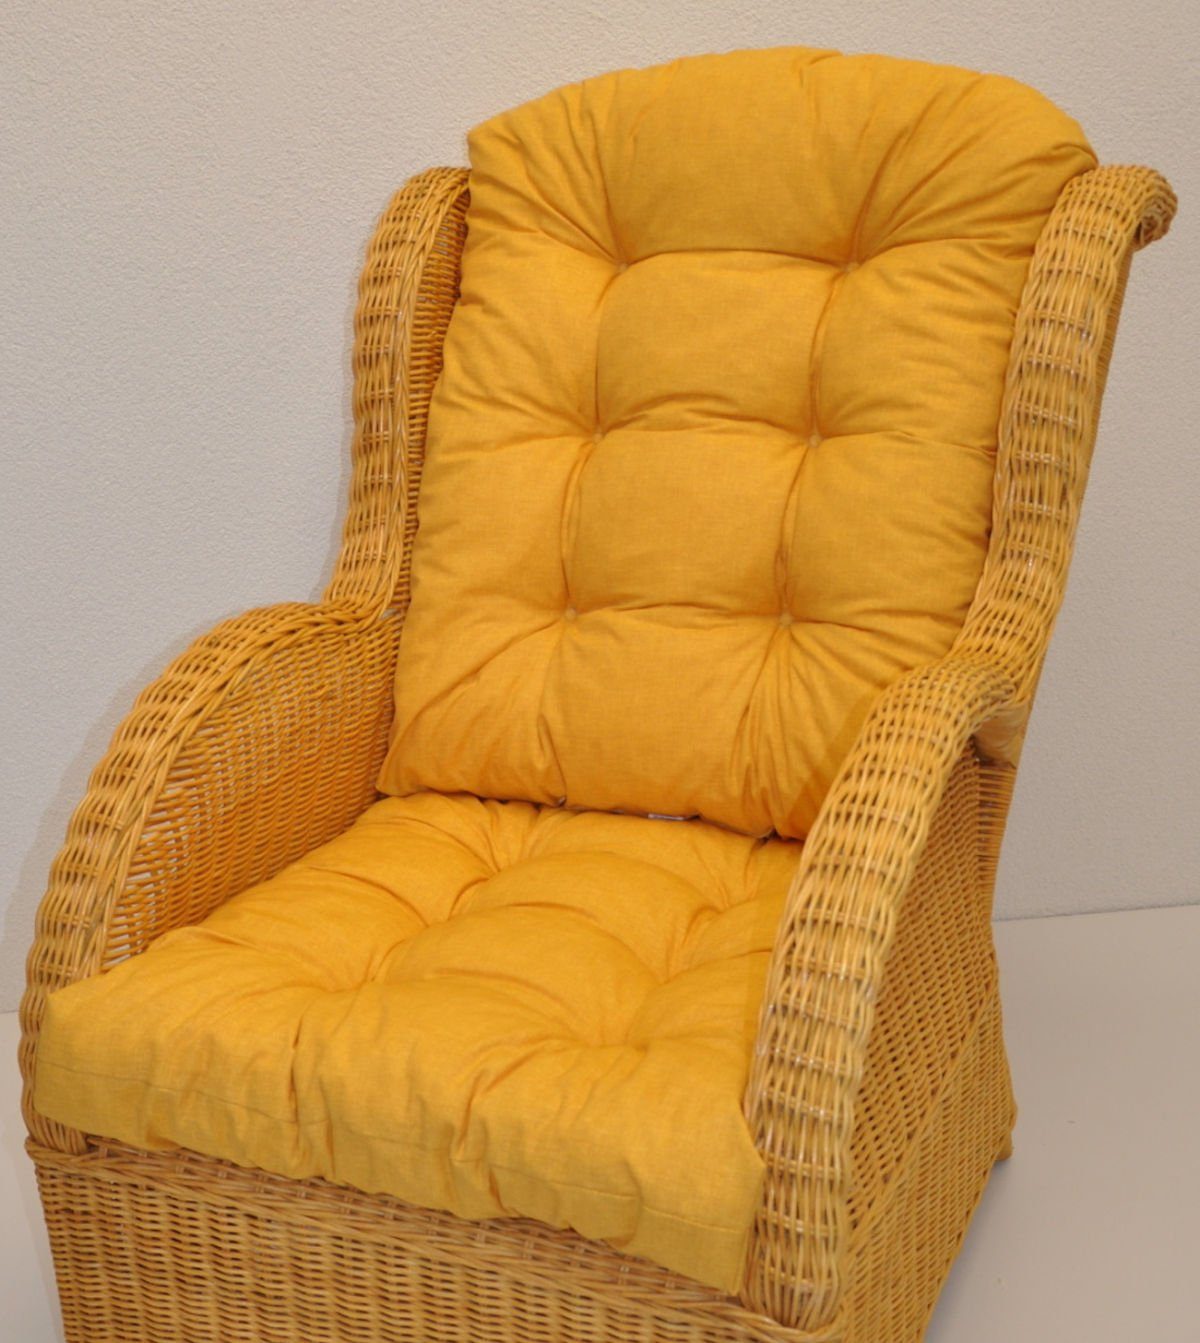 Ohrensessel für Rattansessel, Sesselauflage Rattani gelb Rattan Polster Color Kissen